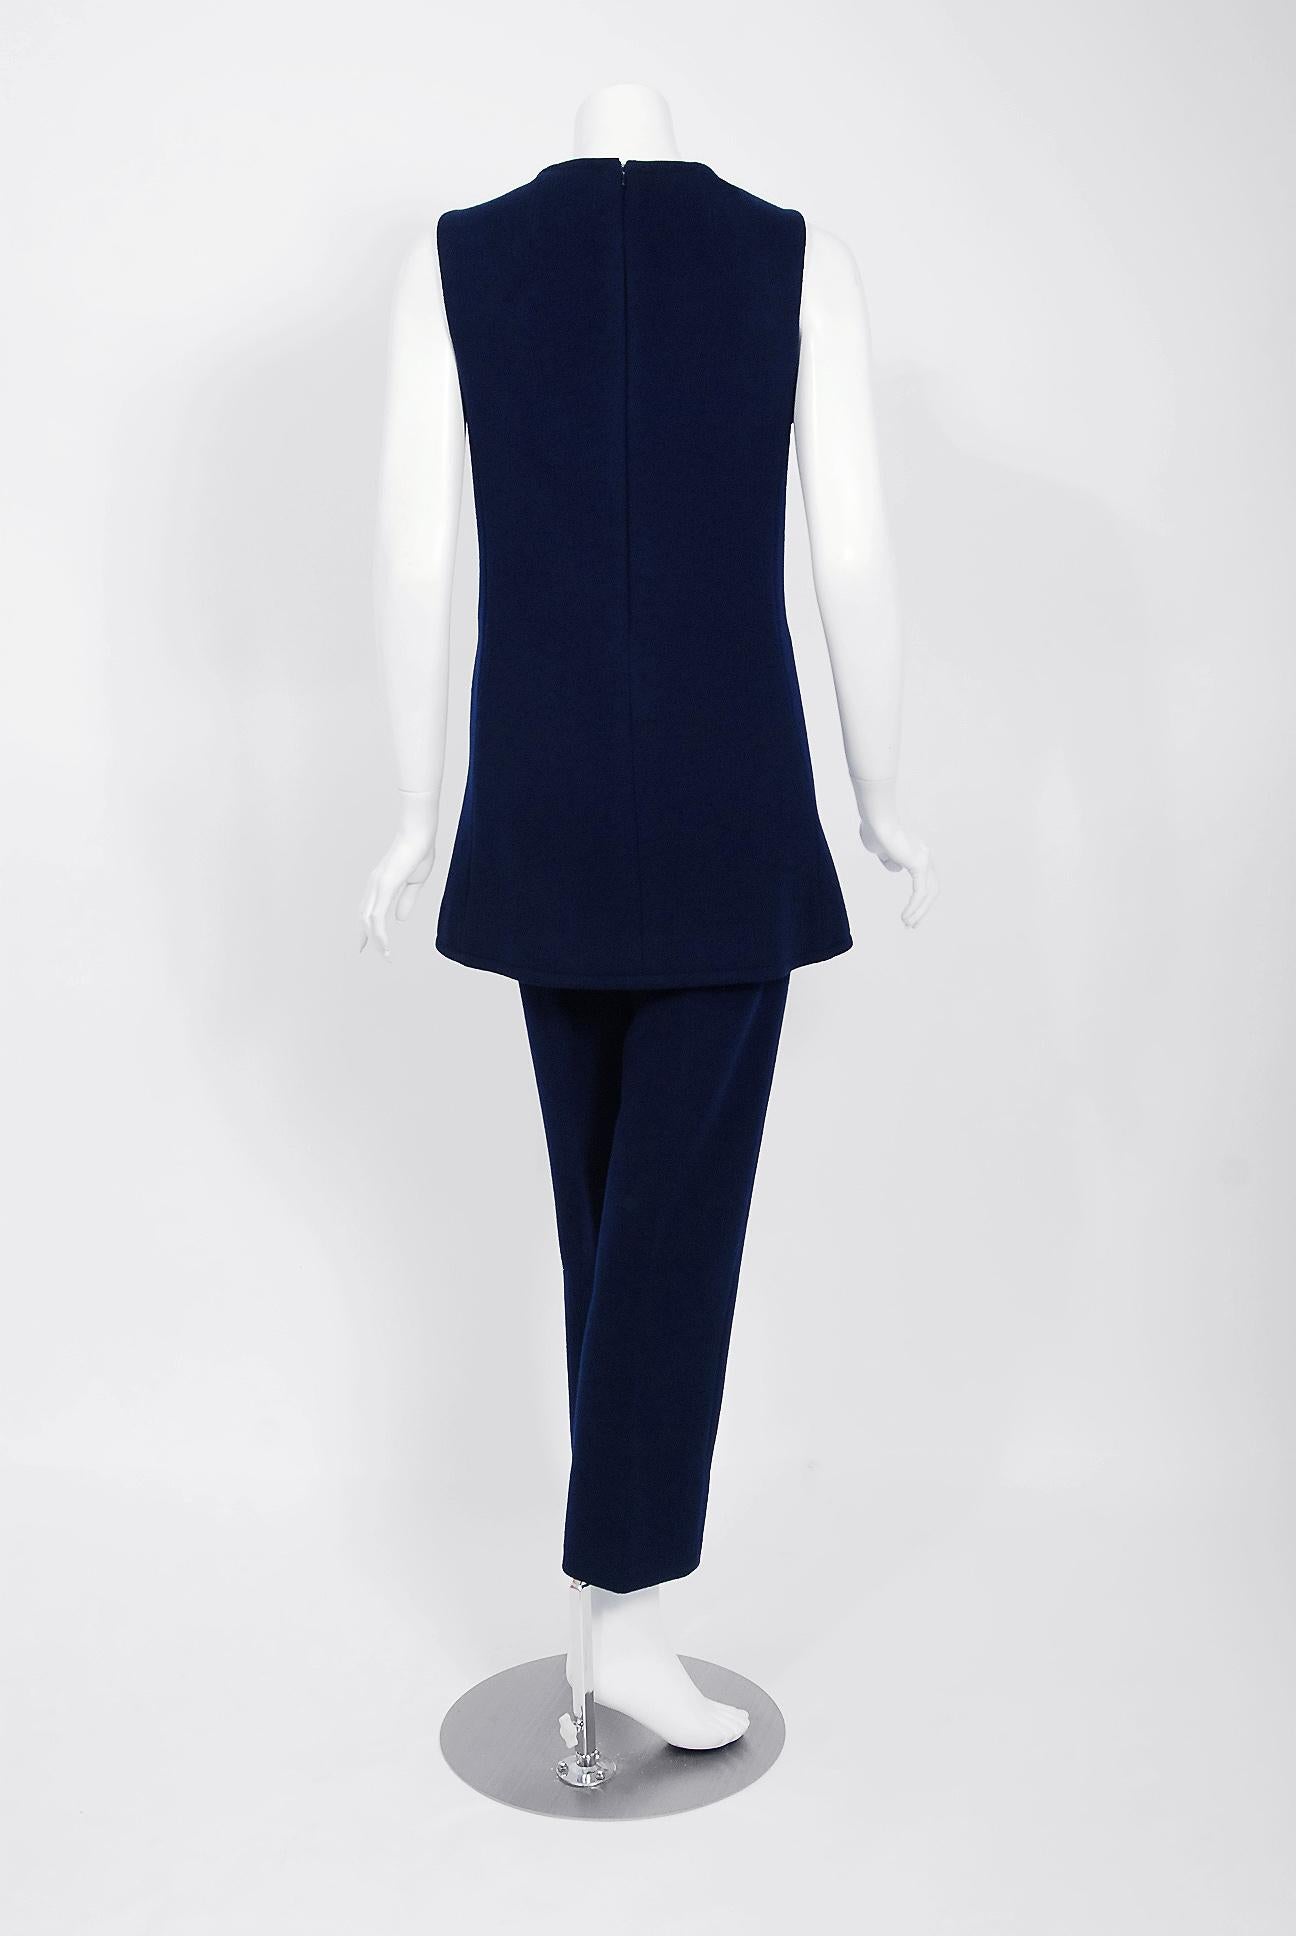 1968 Calvin Klein Navy-Blue Wool Mod Pockets Sleeveless Tunic & Pants Ensemble  2